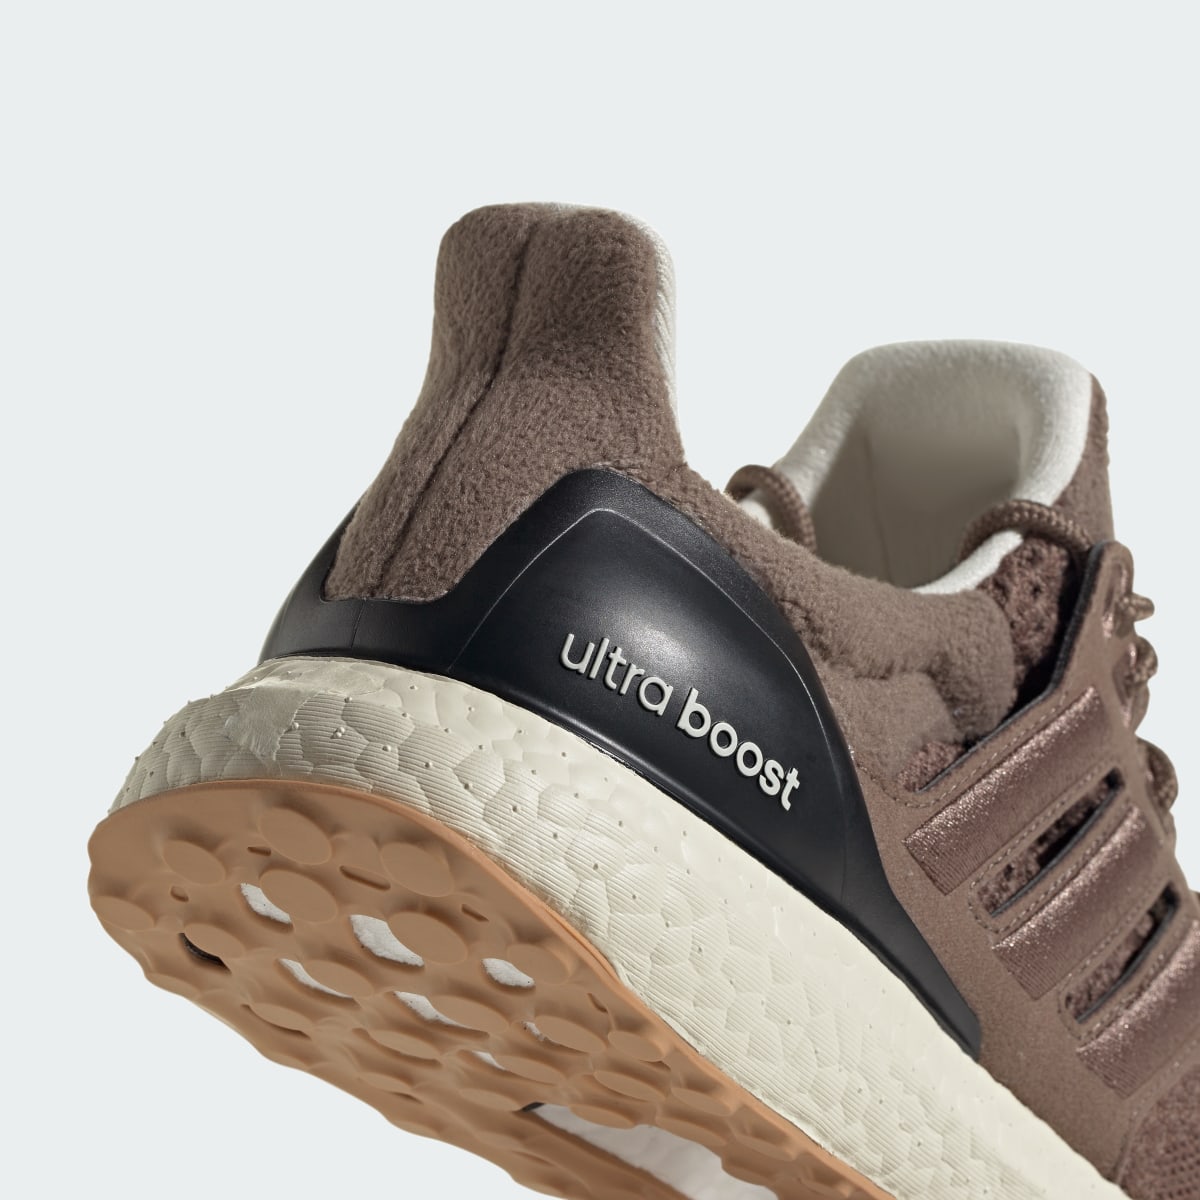 Adidas Ultraboost 1.0 Ayakkabı. 10